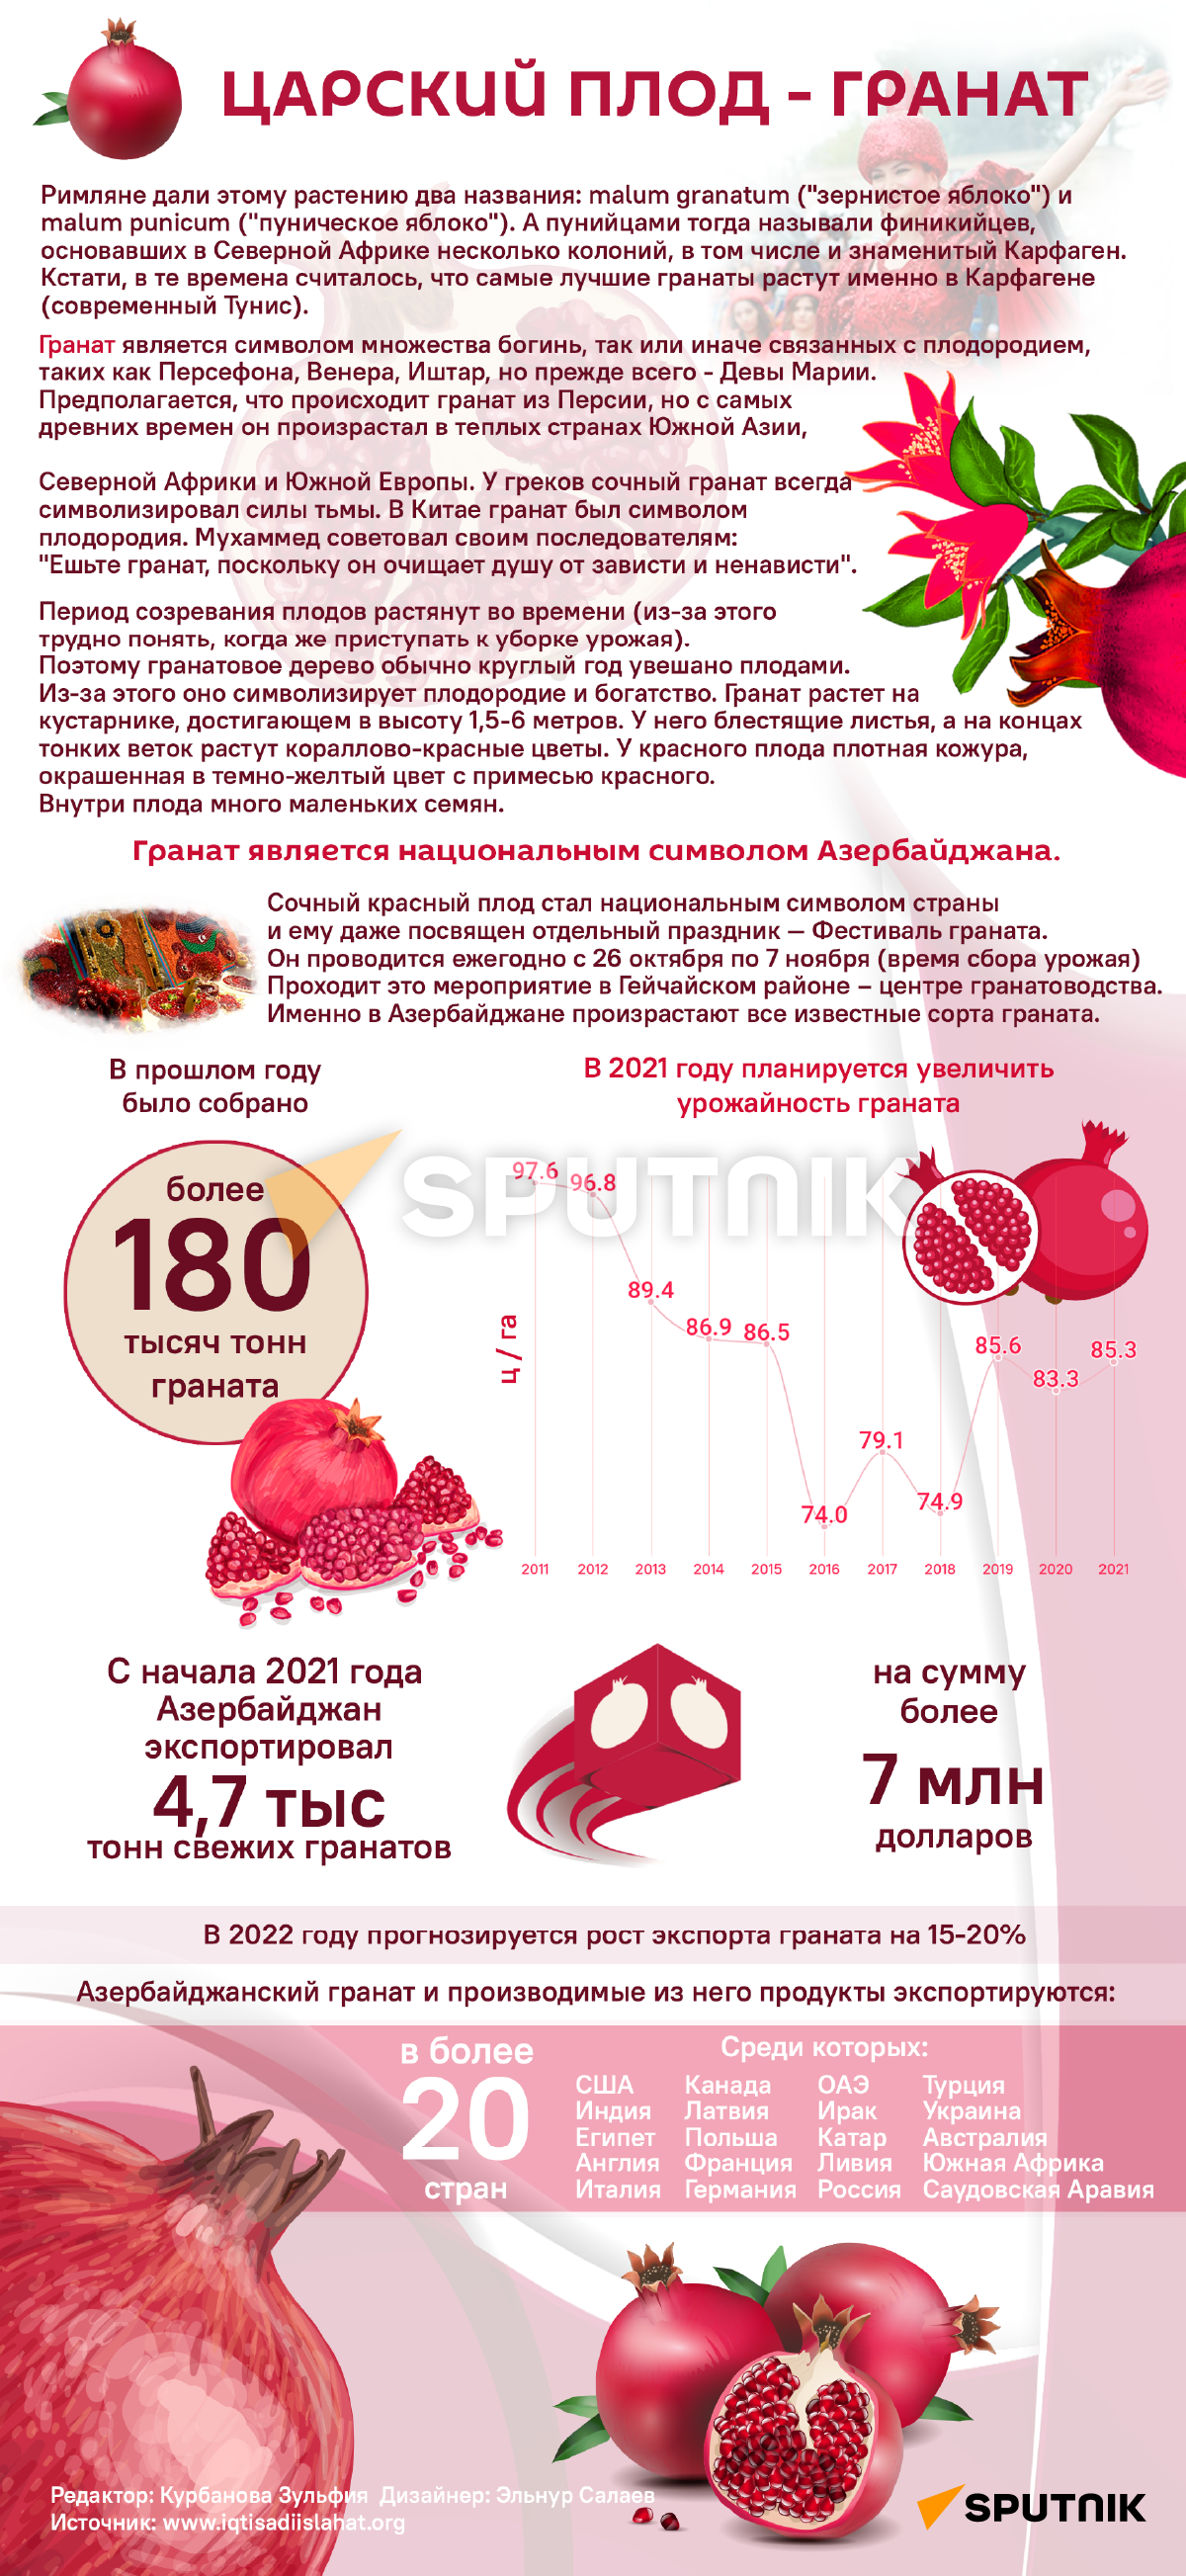 Инфографика: Царский плод - гранат - Sputnik Азербайджан